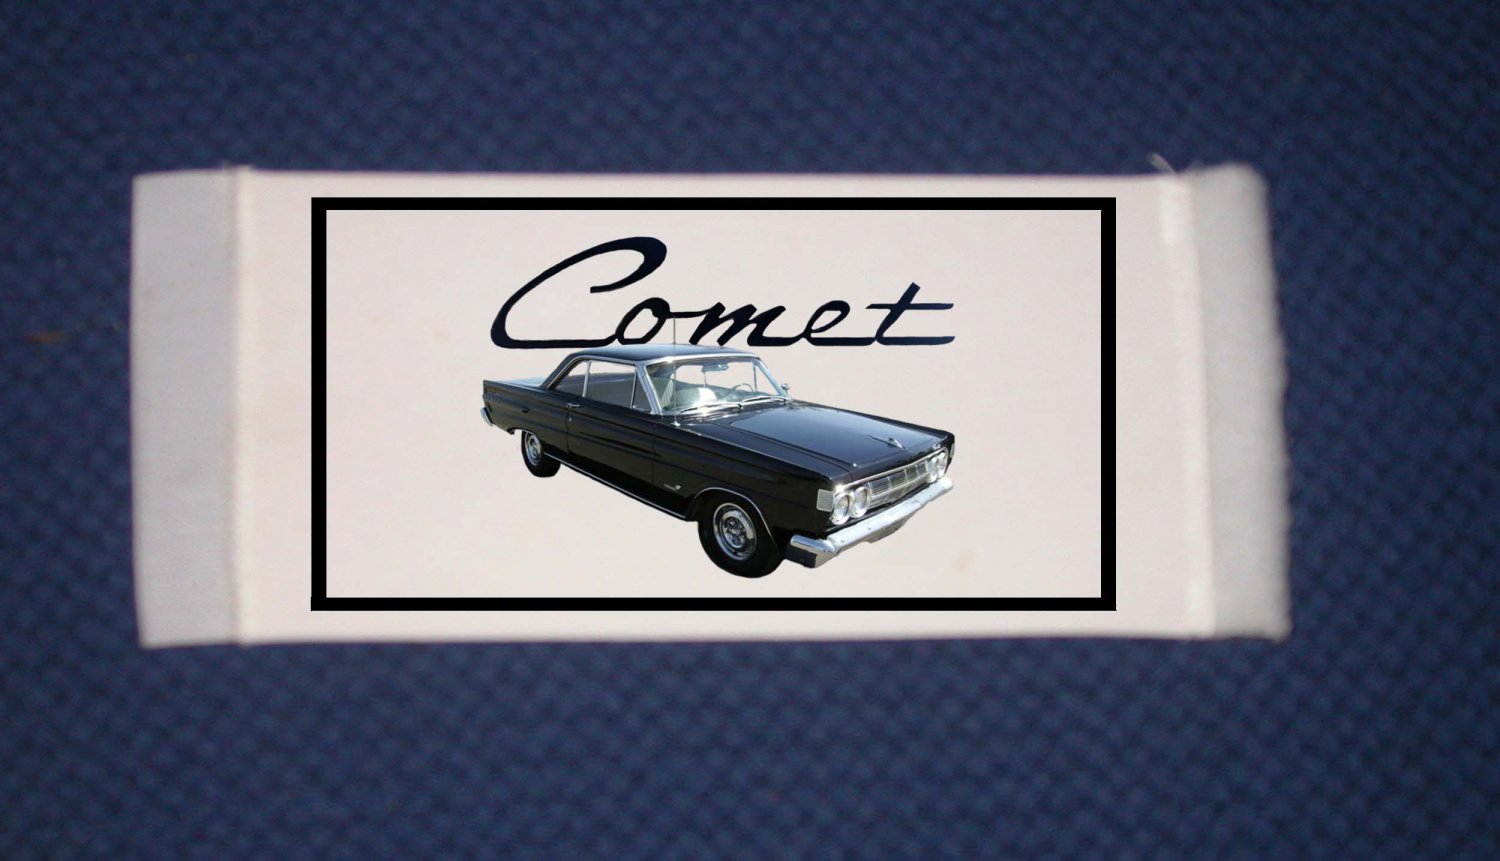 New 1964 Mercury Comet Coozie (Beverage insulator)